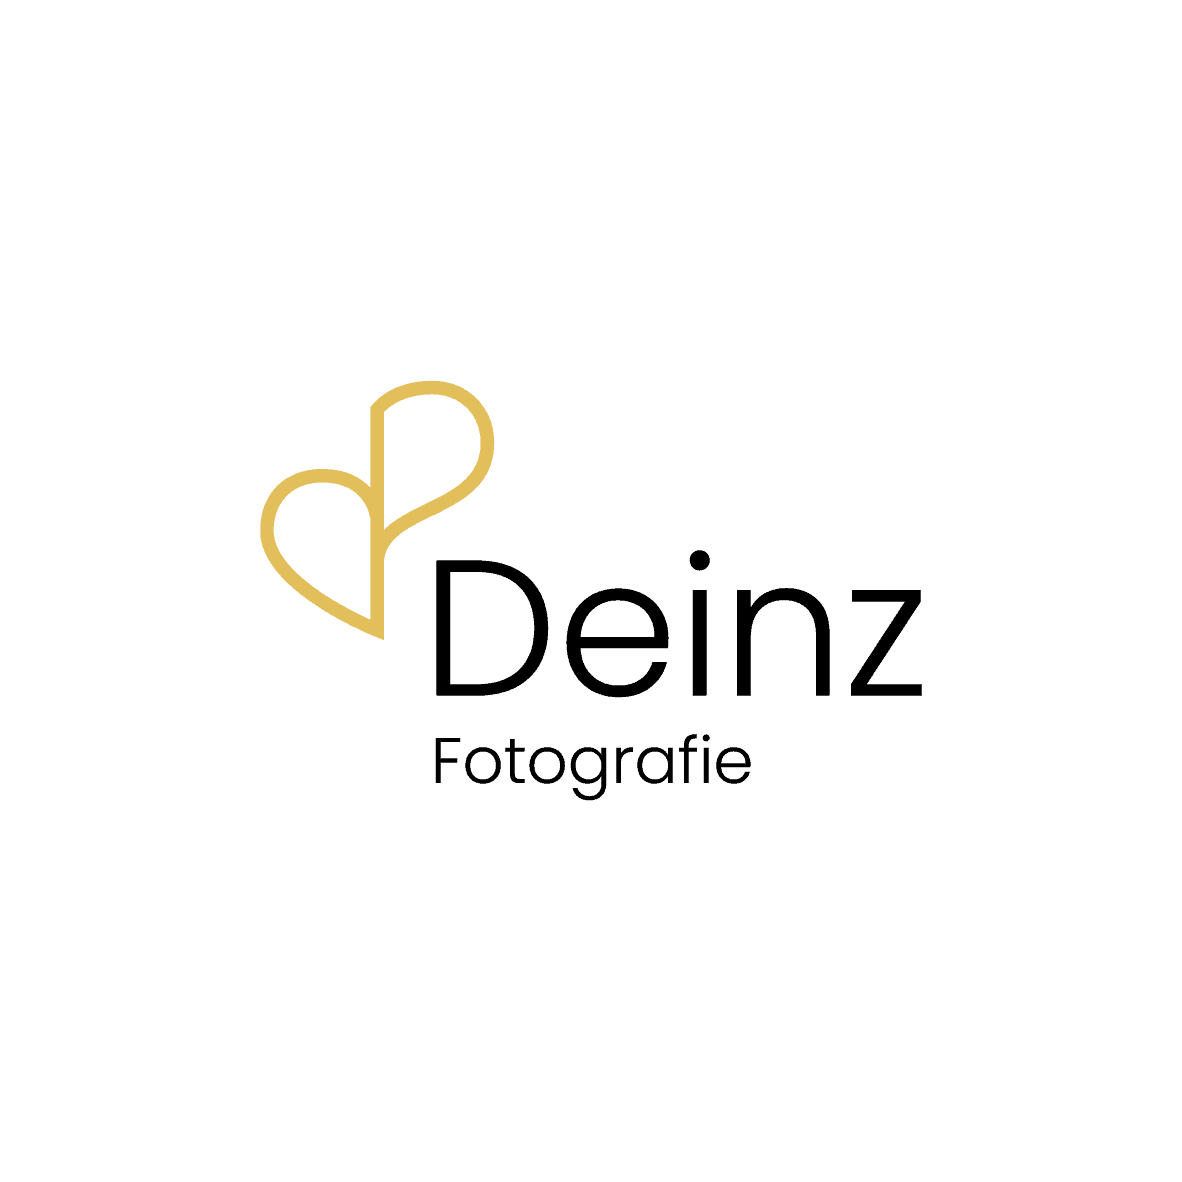 Deinz-Fotografie by Deniz Pekdemir